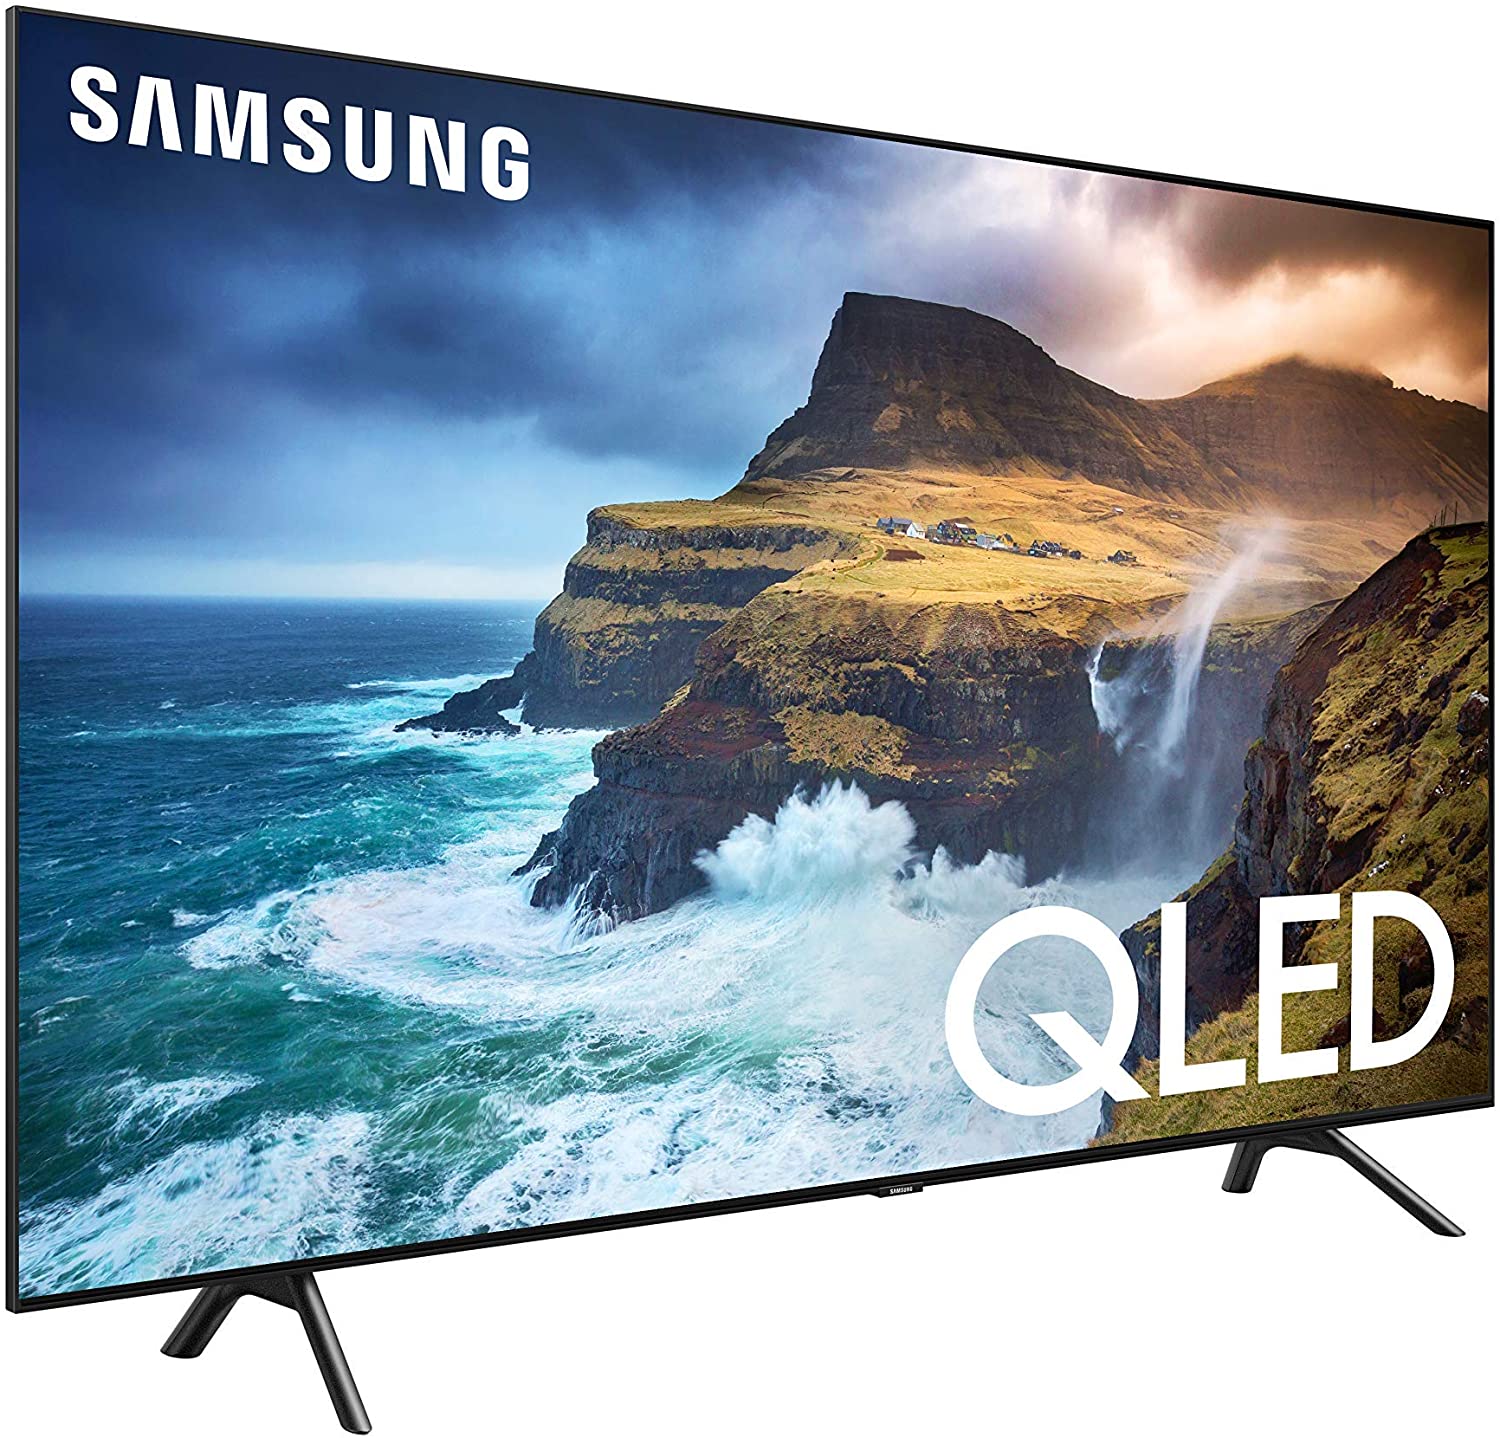 Samsung Smart TV 75" Class Q7-Series 4K Ultra HD - HDR QLED (Refurbished)